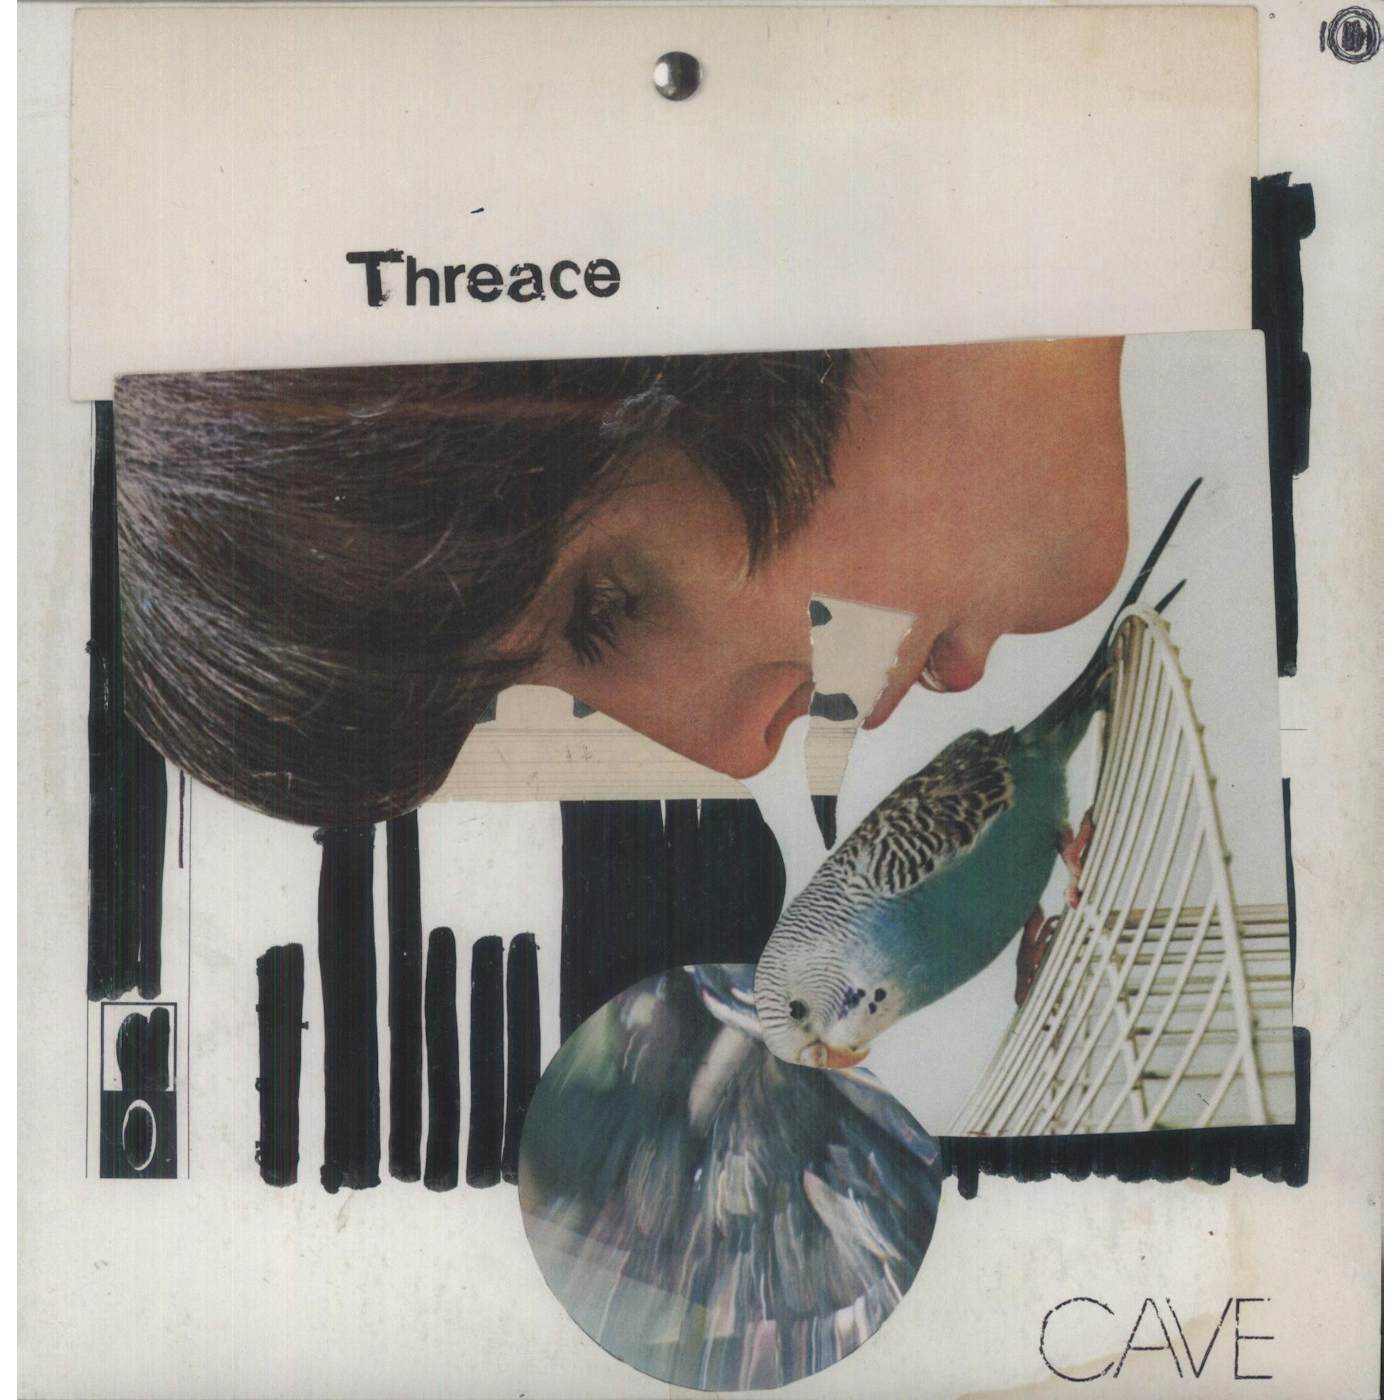 Cave Threace Vinyl Record